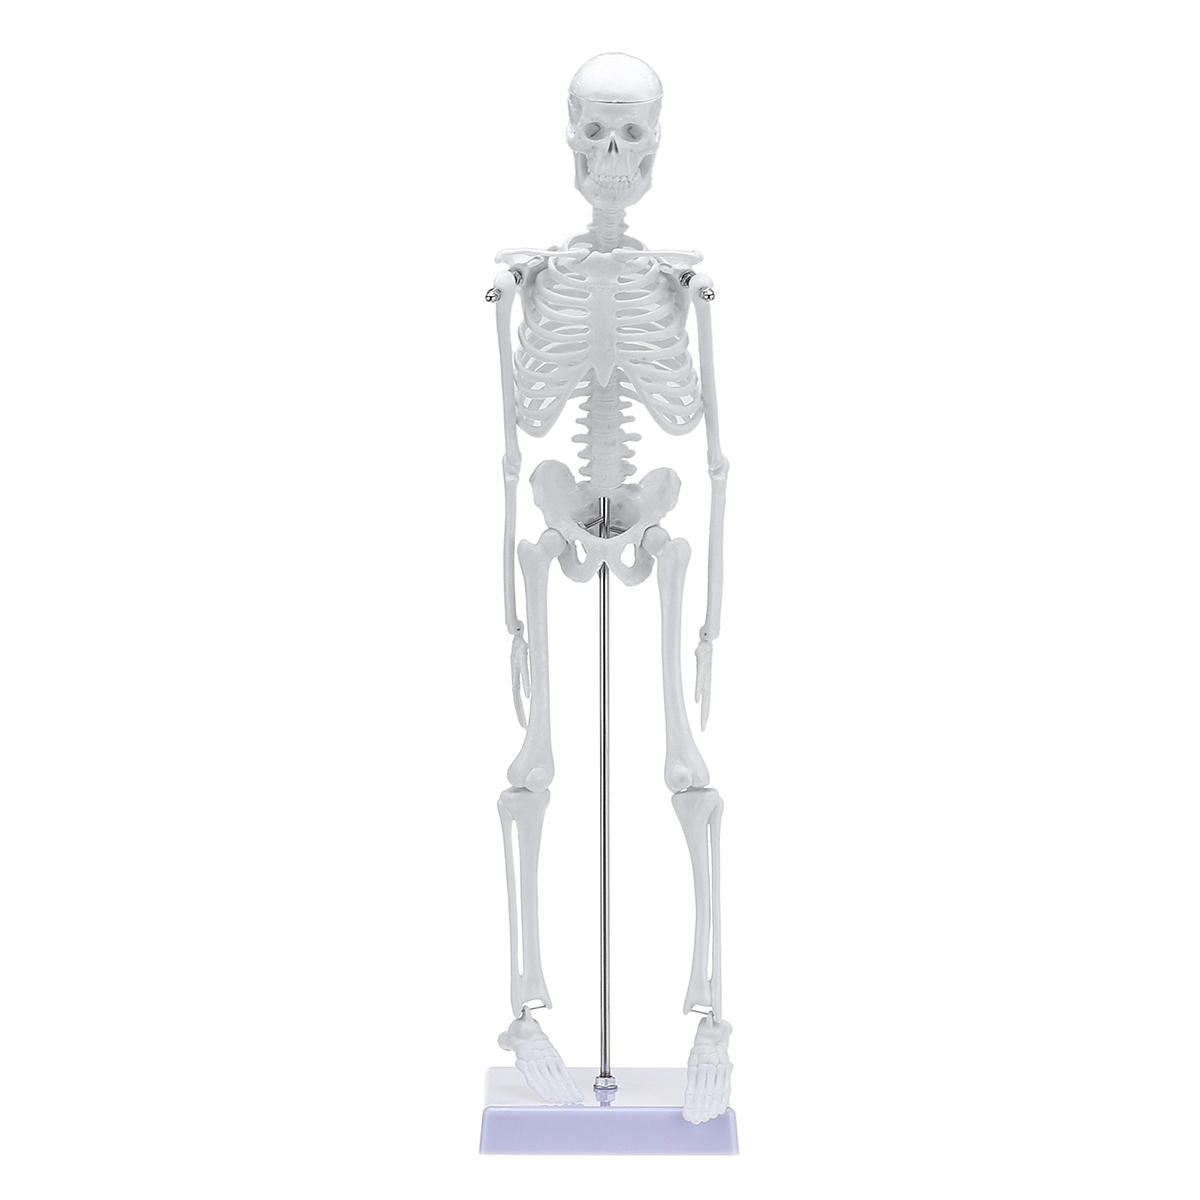 

45cm Human Anatomical Anatomy Skeleton Learn Aid Human Skeletal Model